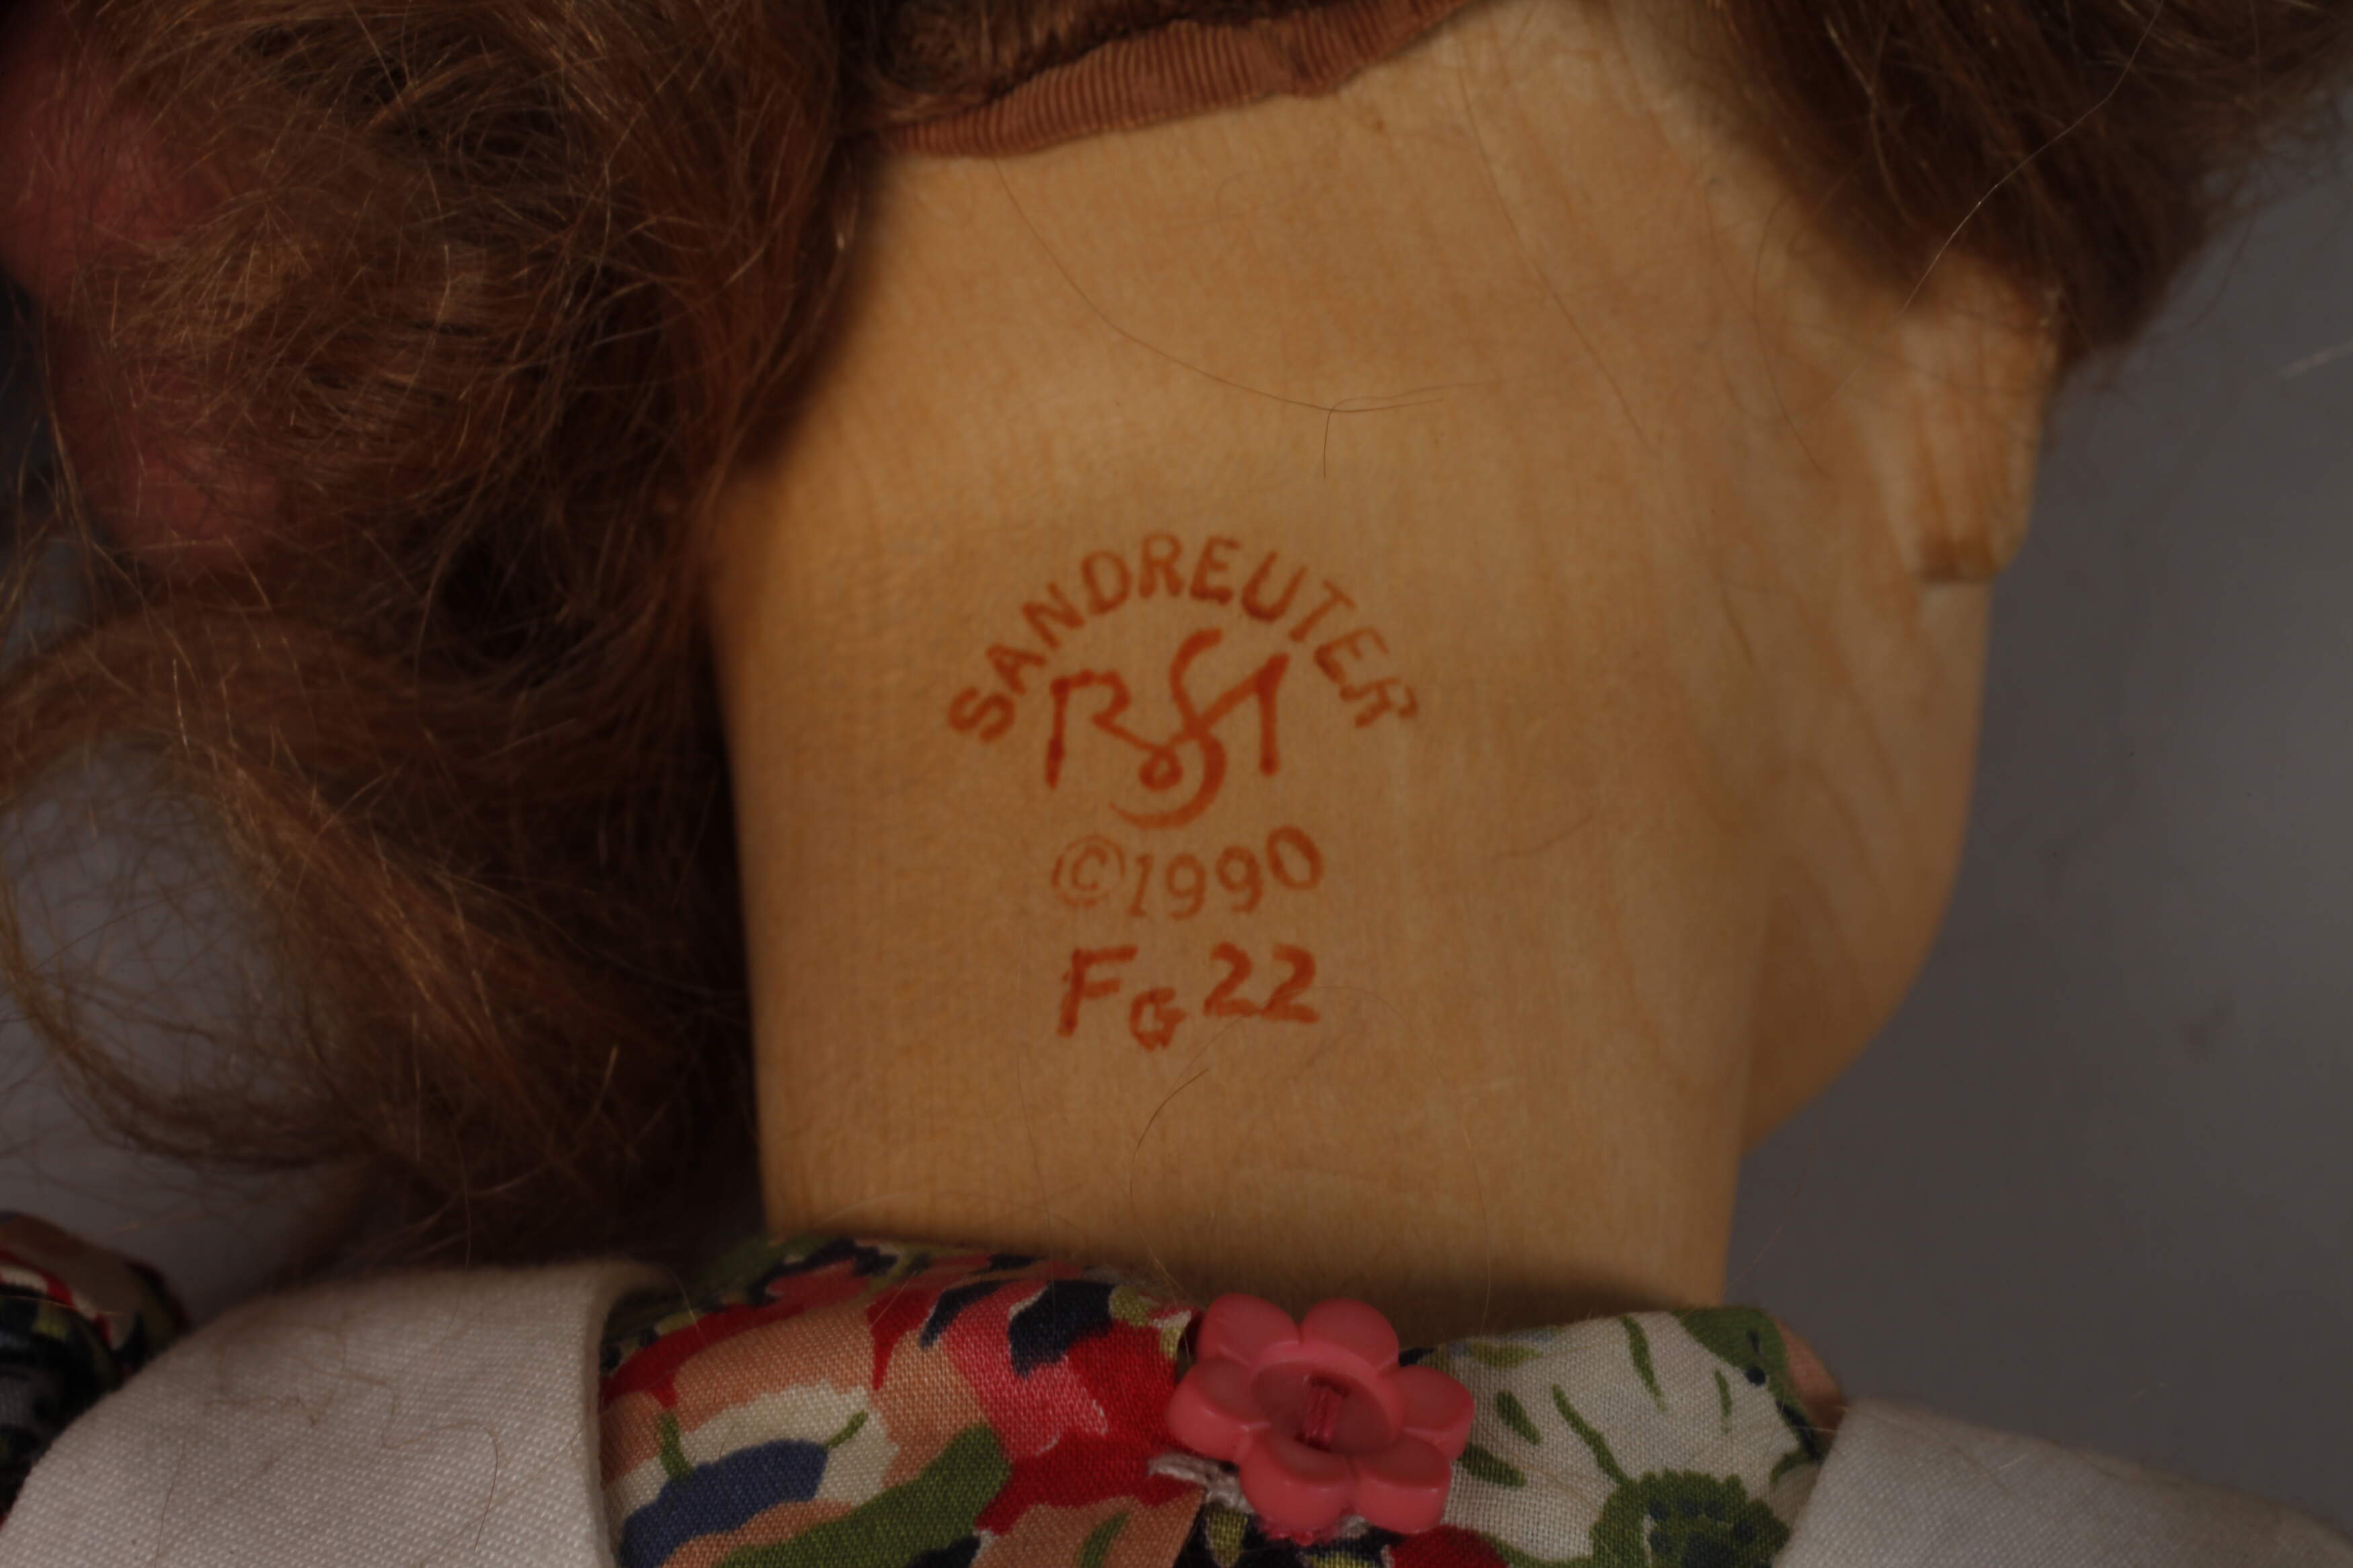 Regina Sandreuter wooden doll "Fiona" - Image 3 of 3